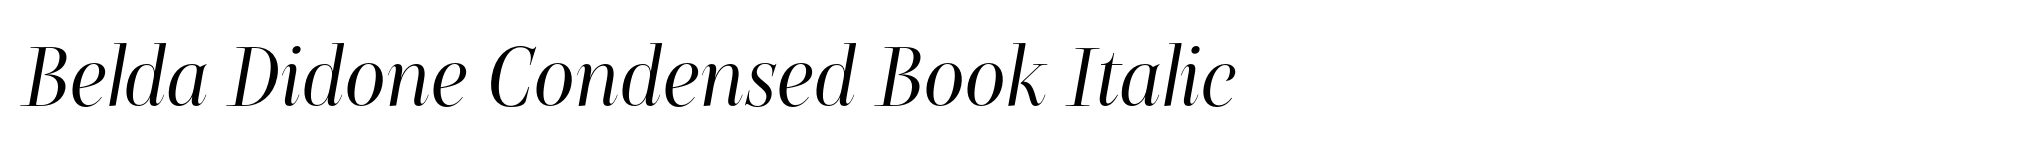 Belda Didone Condensed Book Italic image